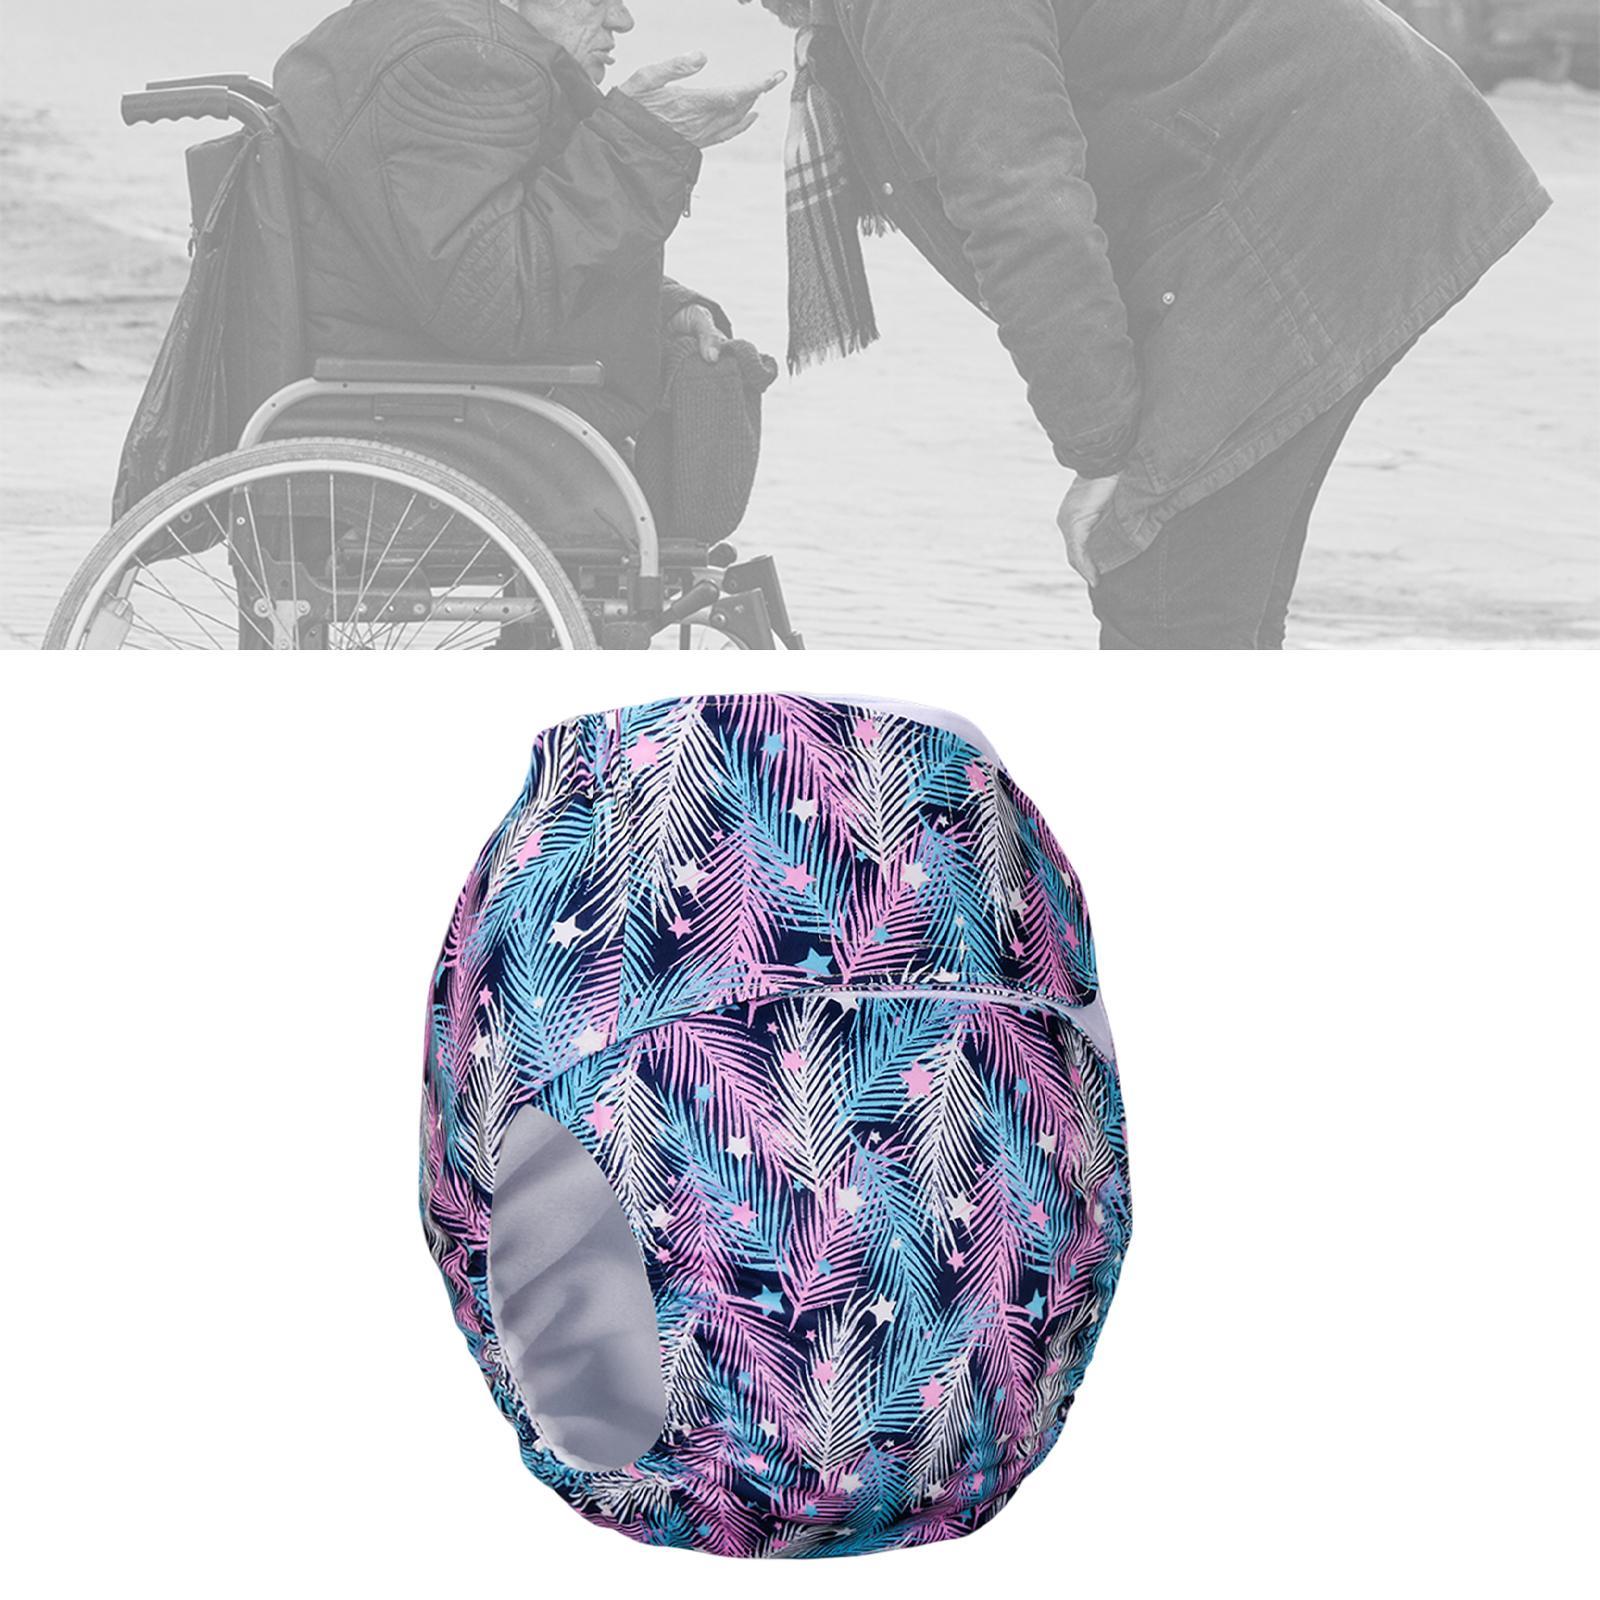 Adjustable Adult Cloth Diaper Washable Portable for Women Men Disabled